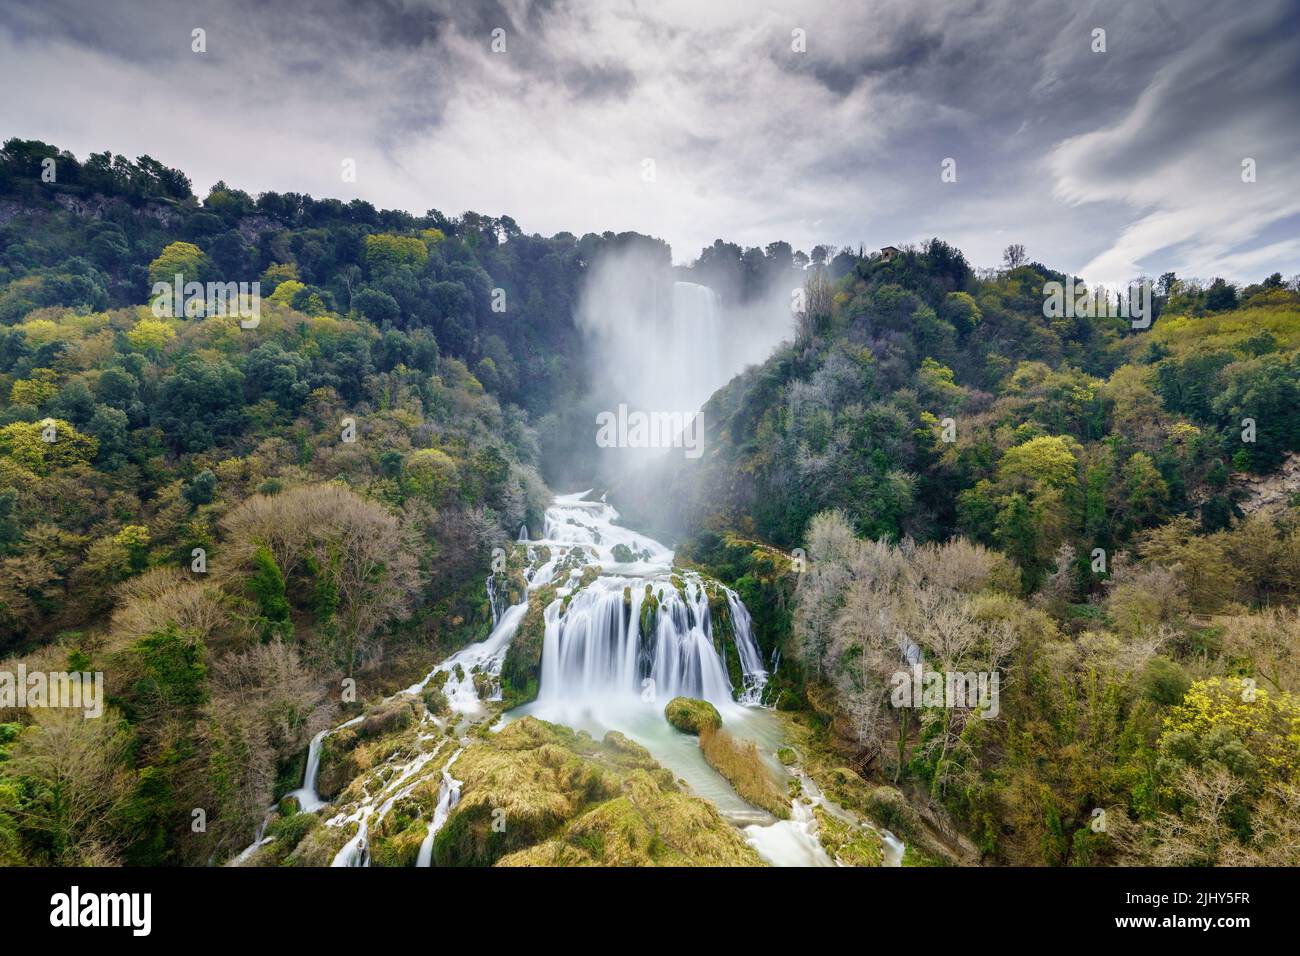 Marmore waterfalls, Italy Stock Photo